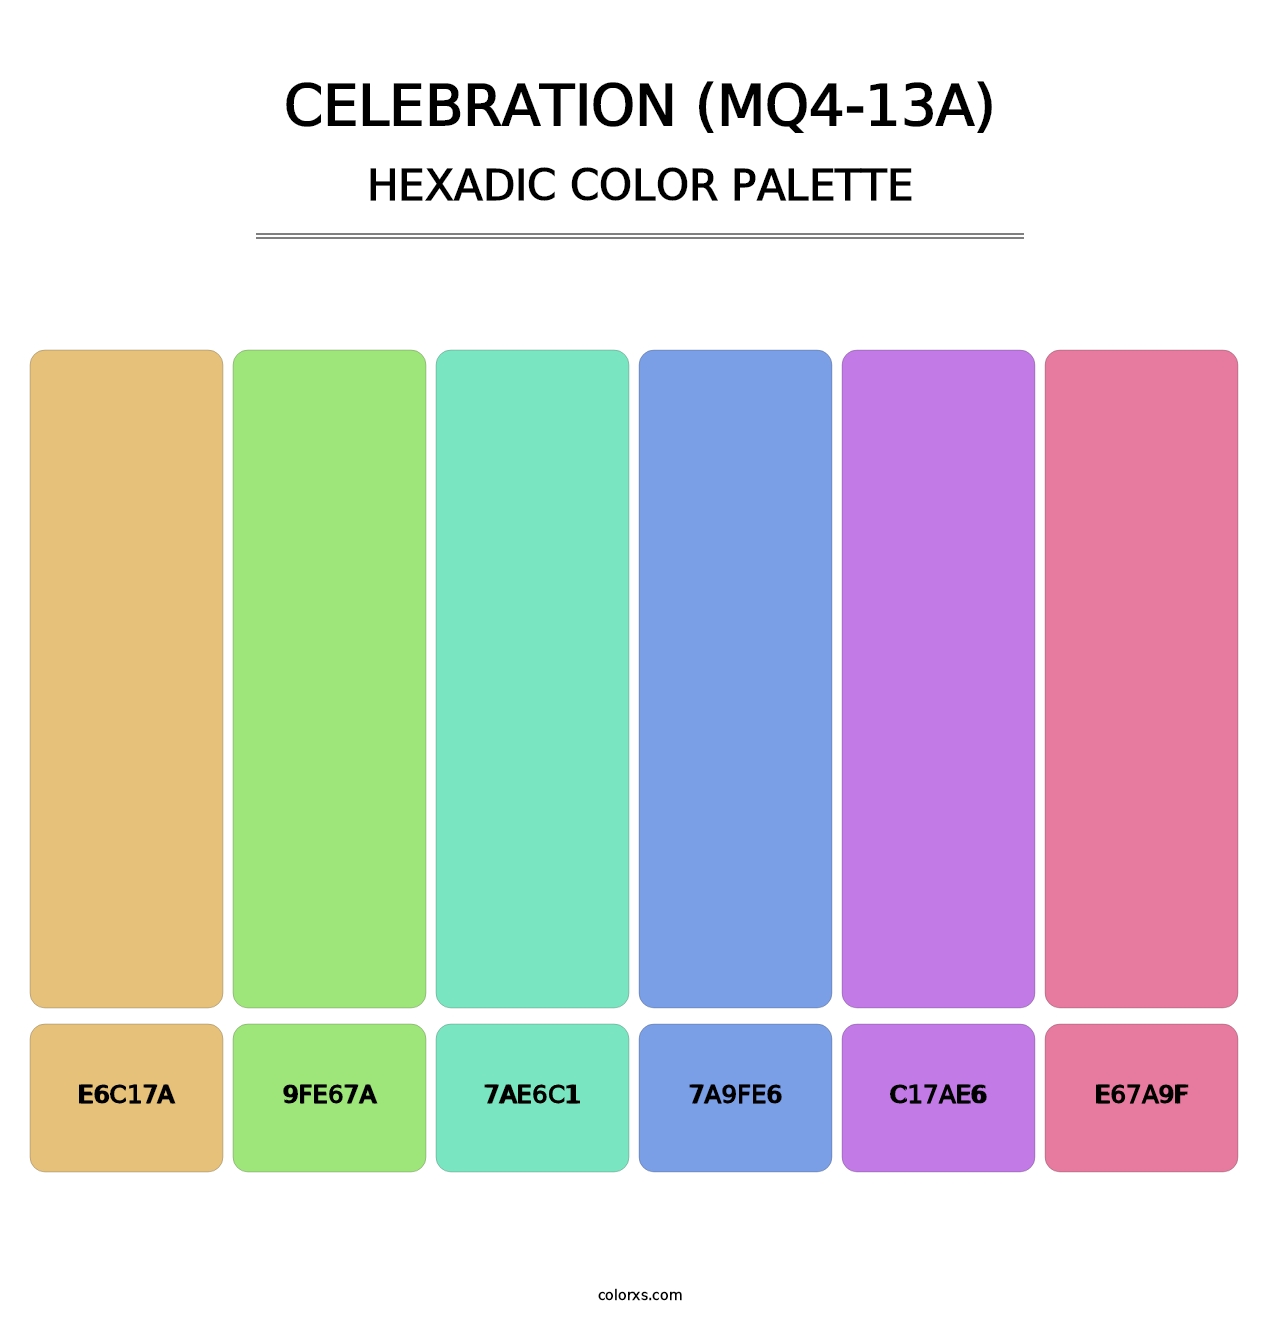 Celebration (MQ4-13A) - Hexadic Color Palette